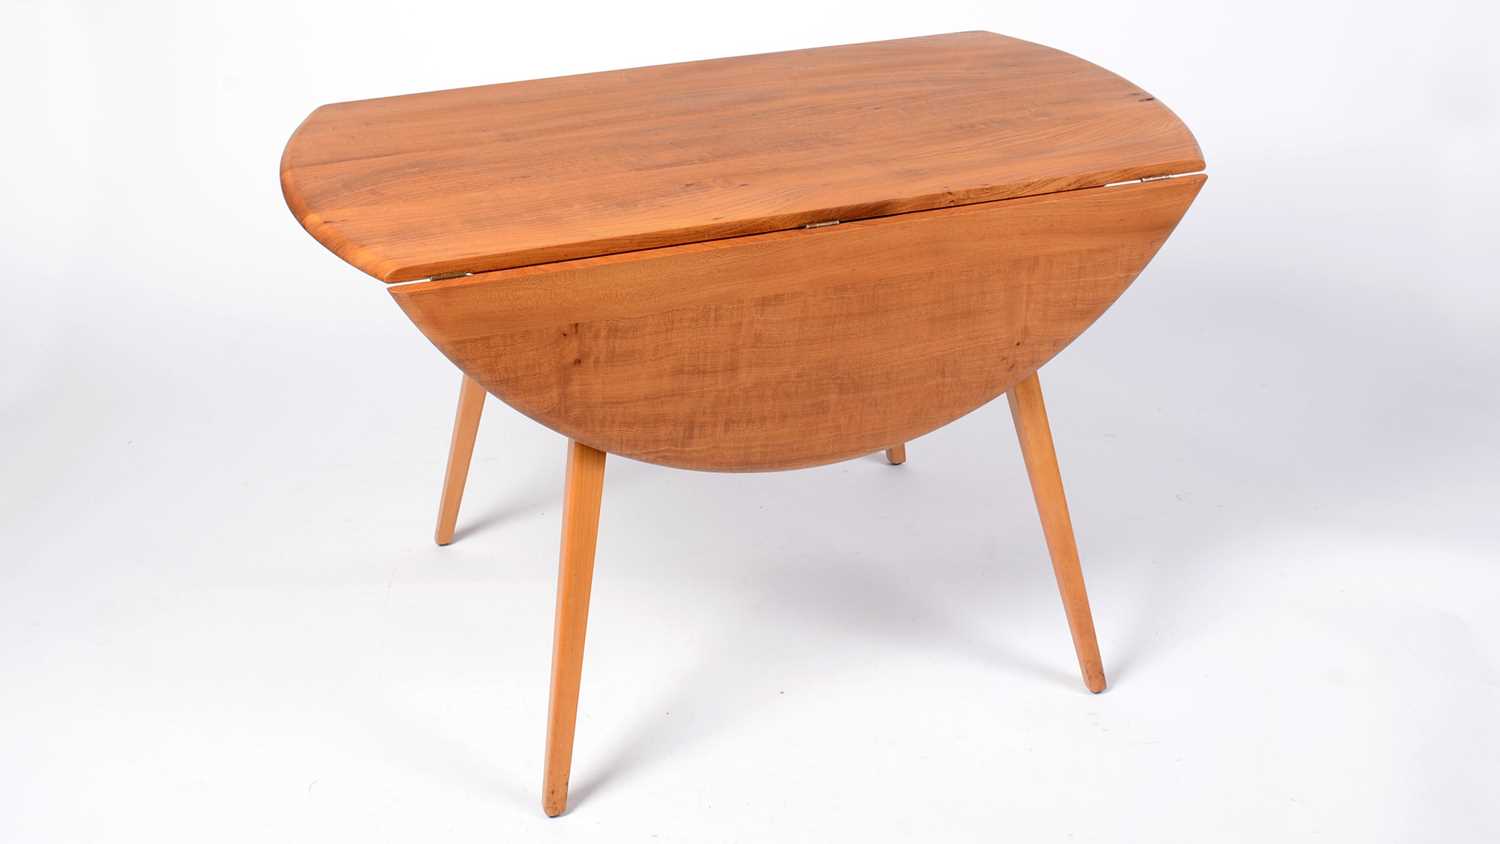 Lot 26 - Ercol - Lucian Ercolani - a retro vintage circa 1960's 20th Century elm dining table